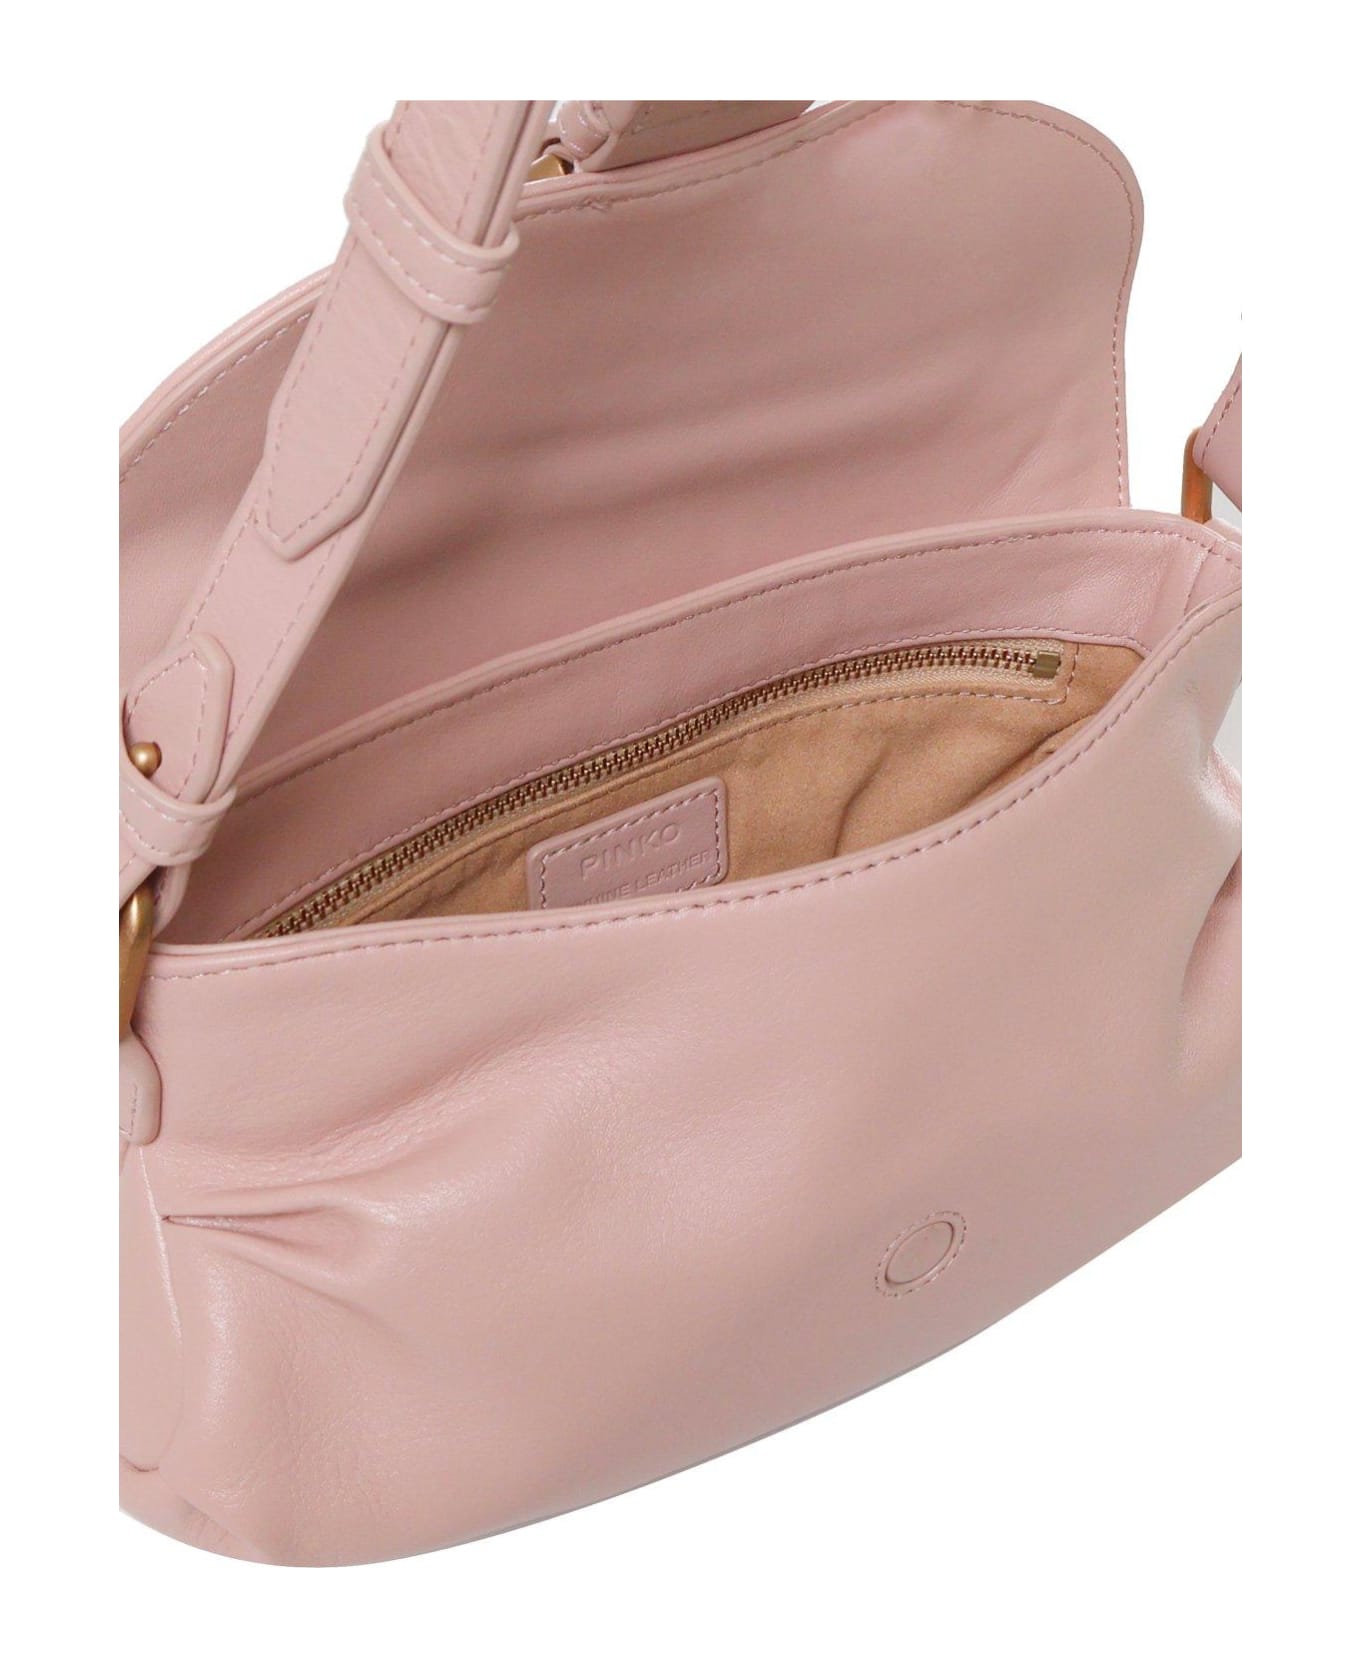 Pinko Mini Jolene Shoulder Bag - Light pink トートバッグ